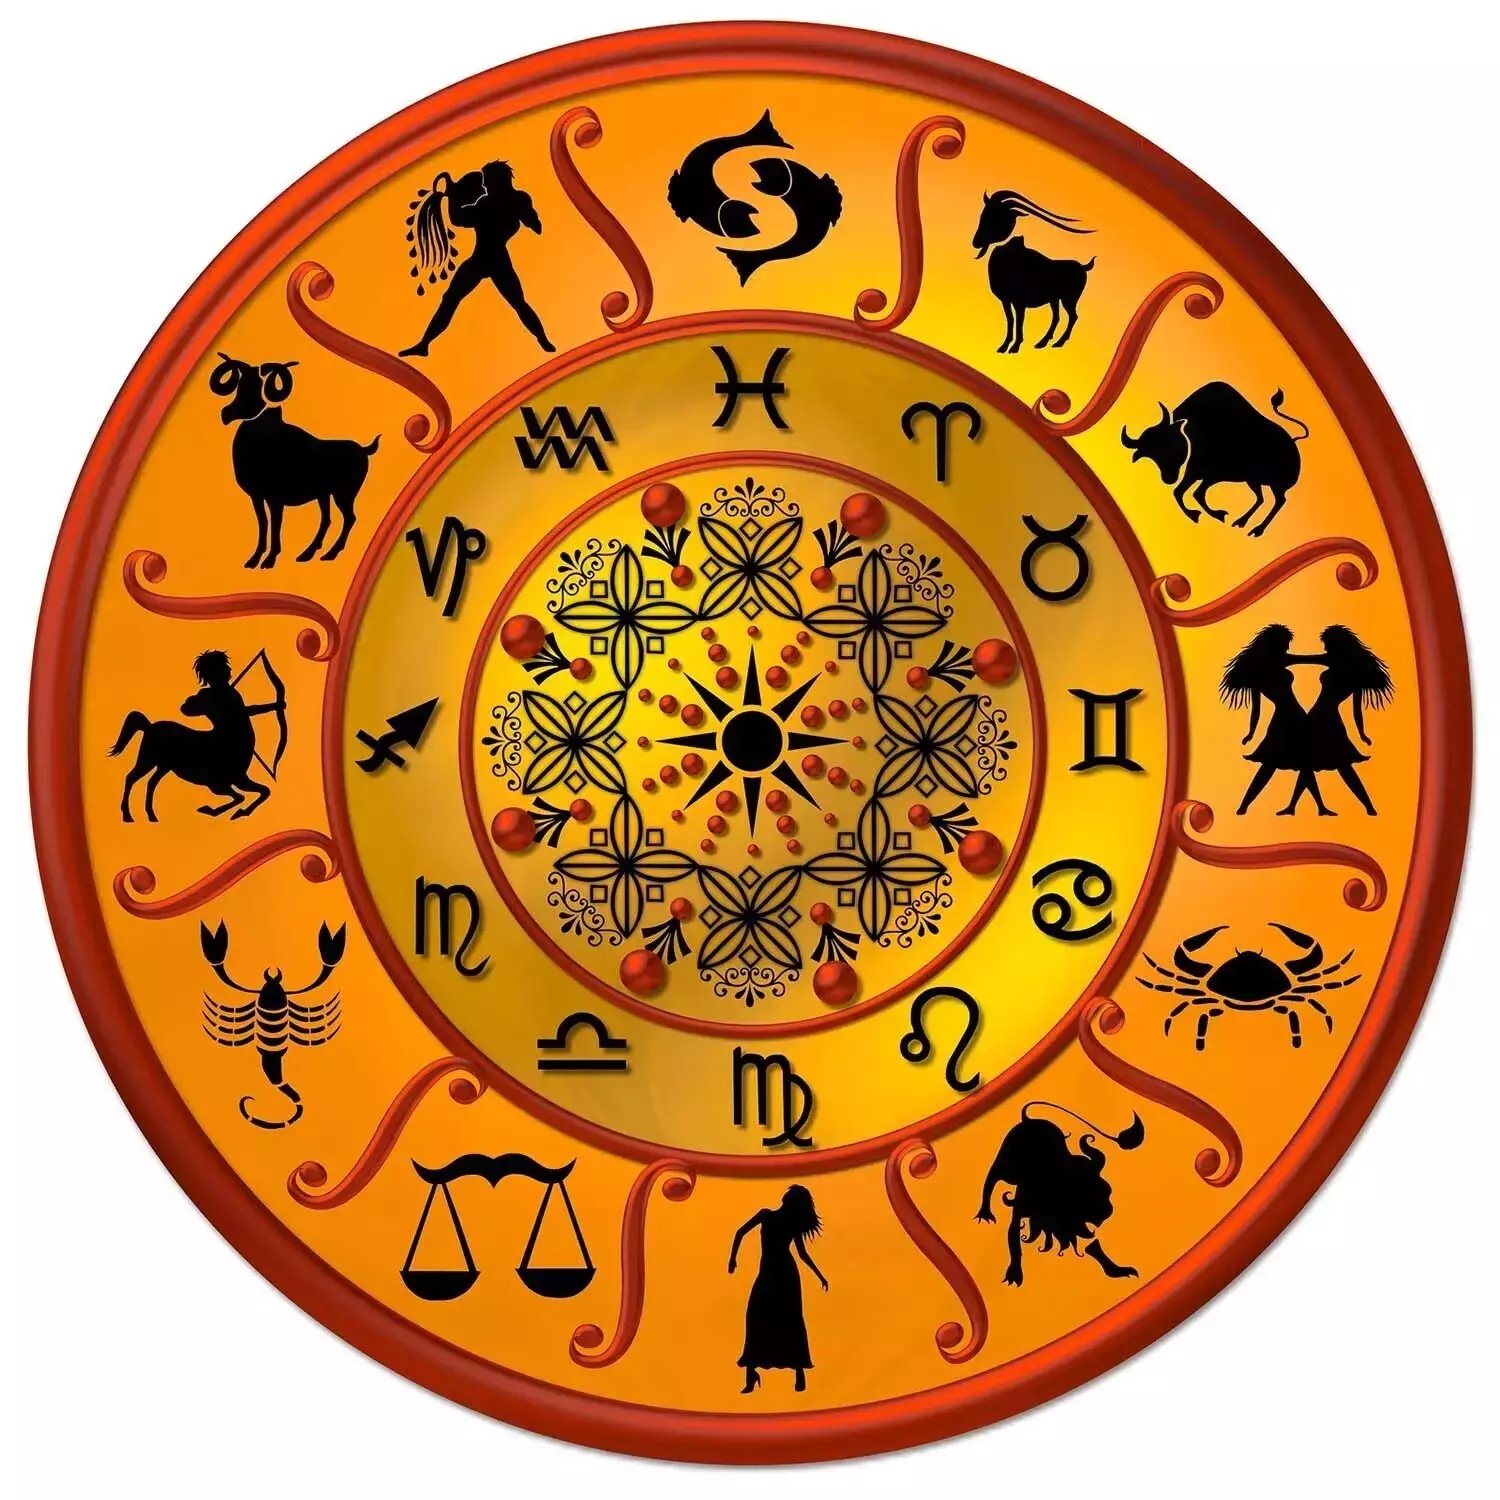 05  Novembar  – Know your todays horoscope